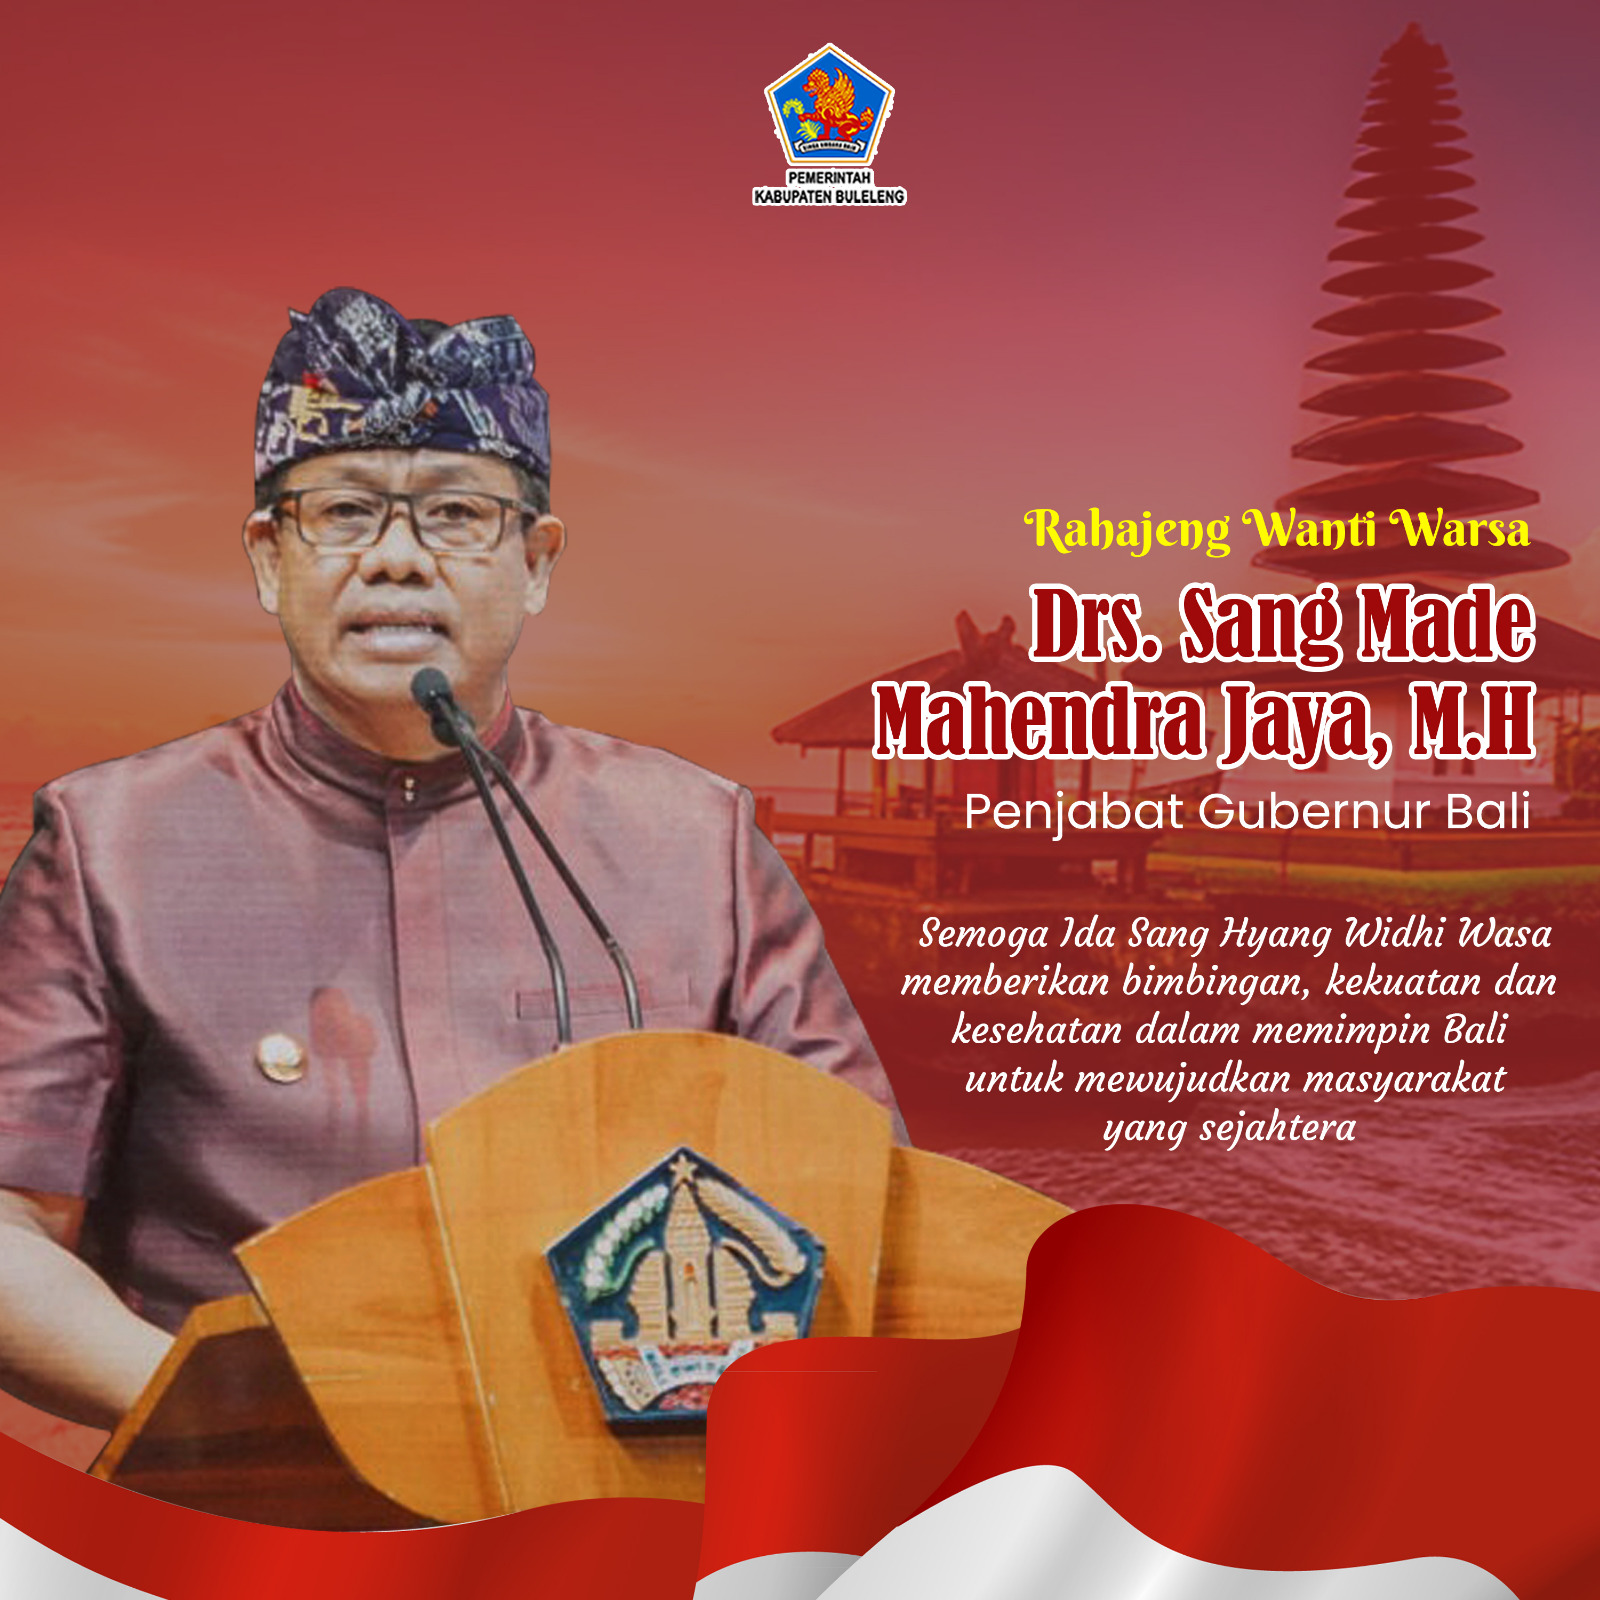 Ulang Tahun Pj Gubernur Bali